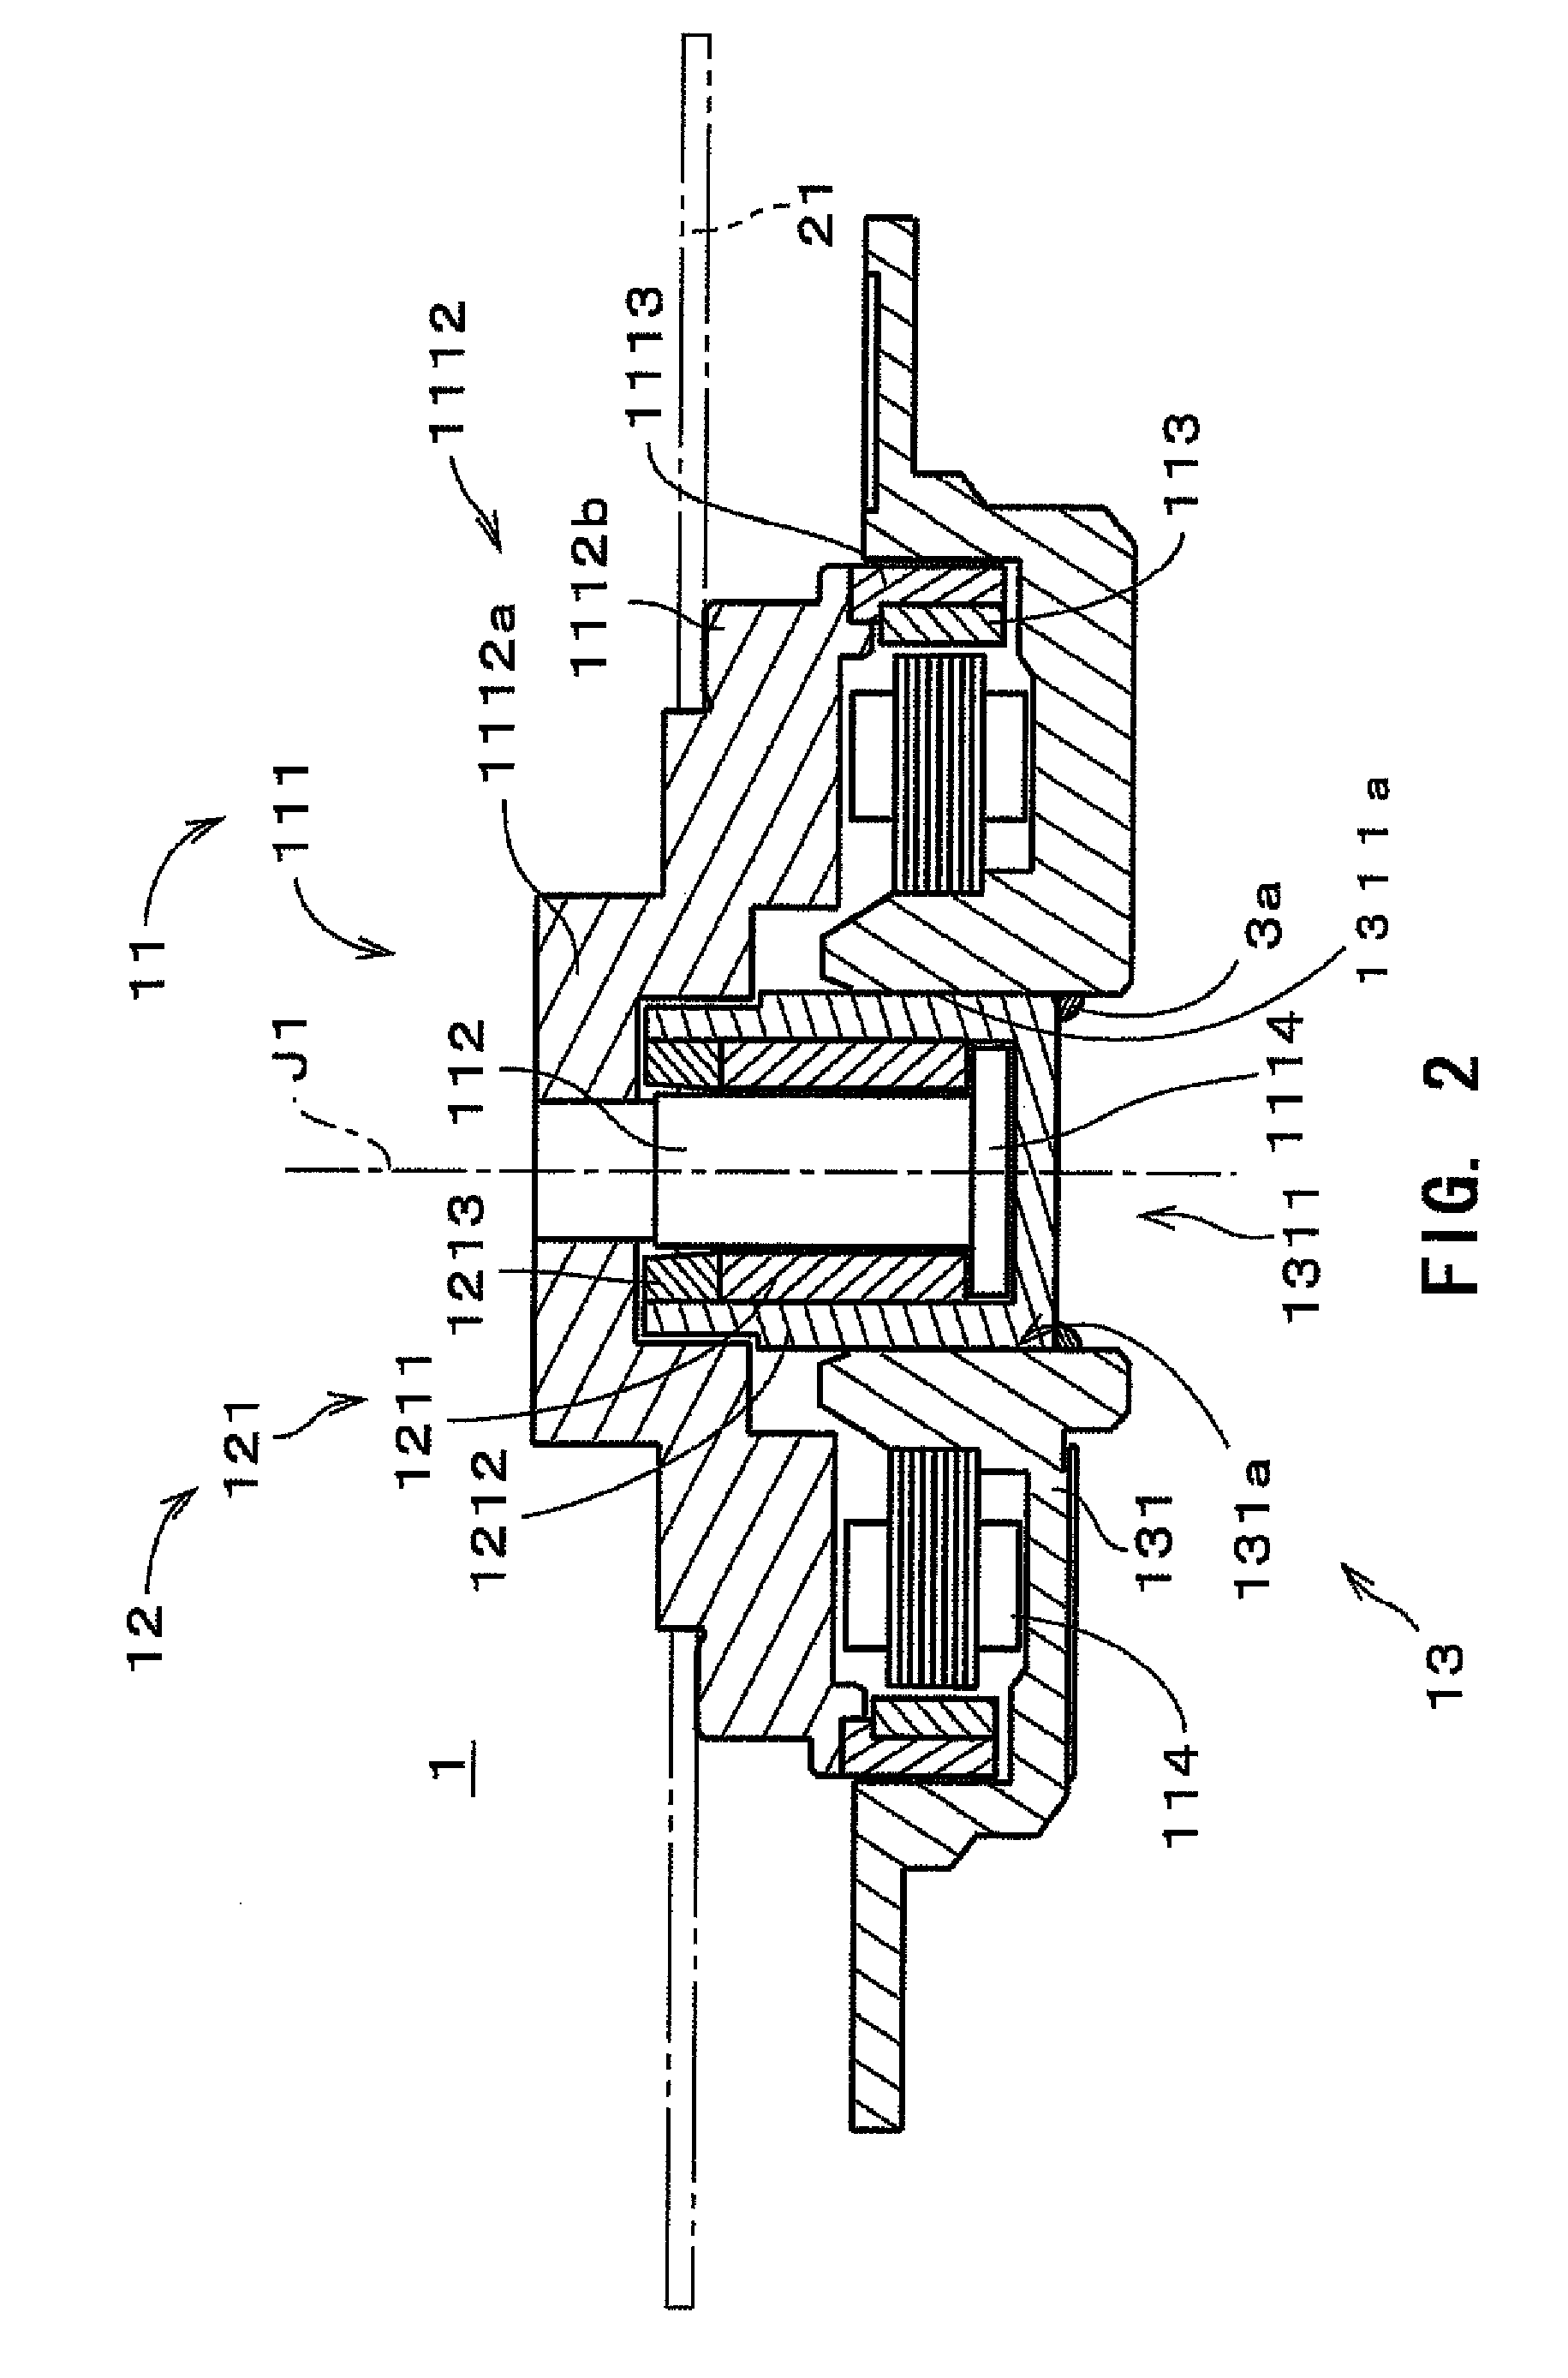 Manufacturing method for motor